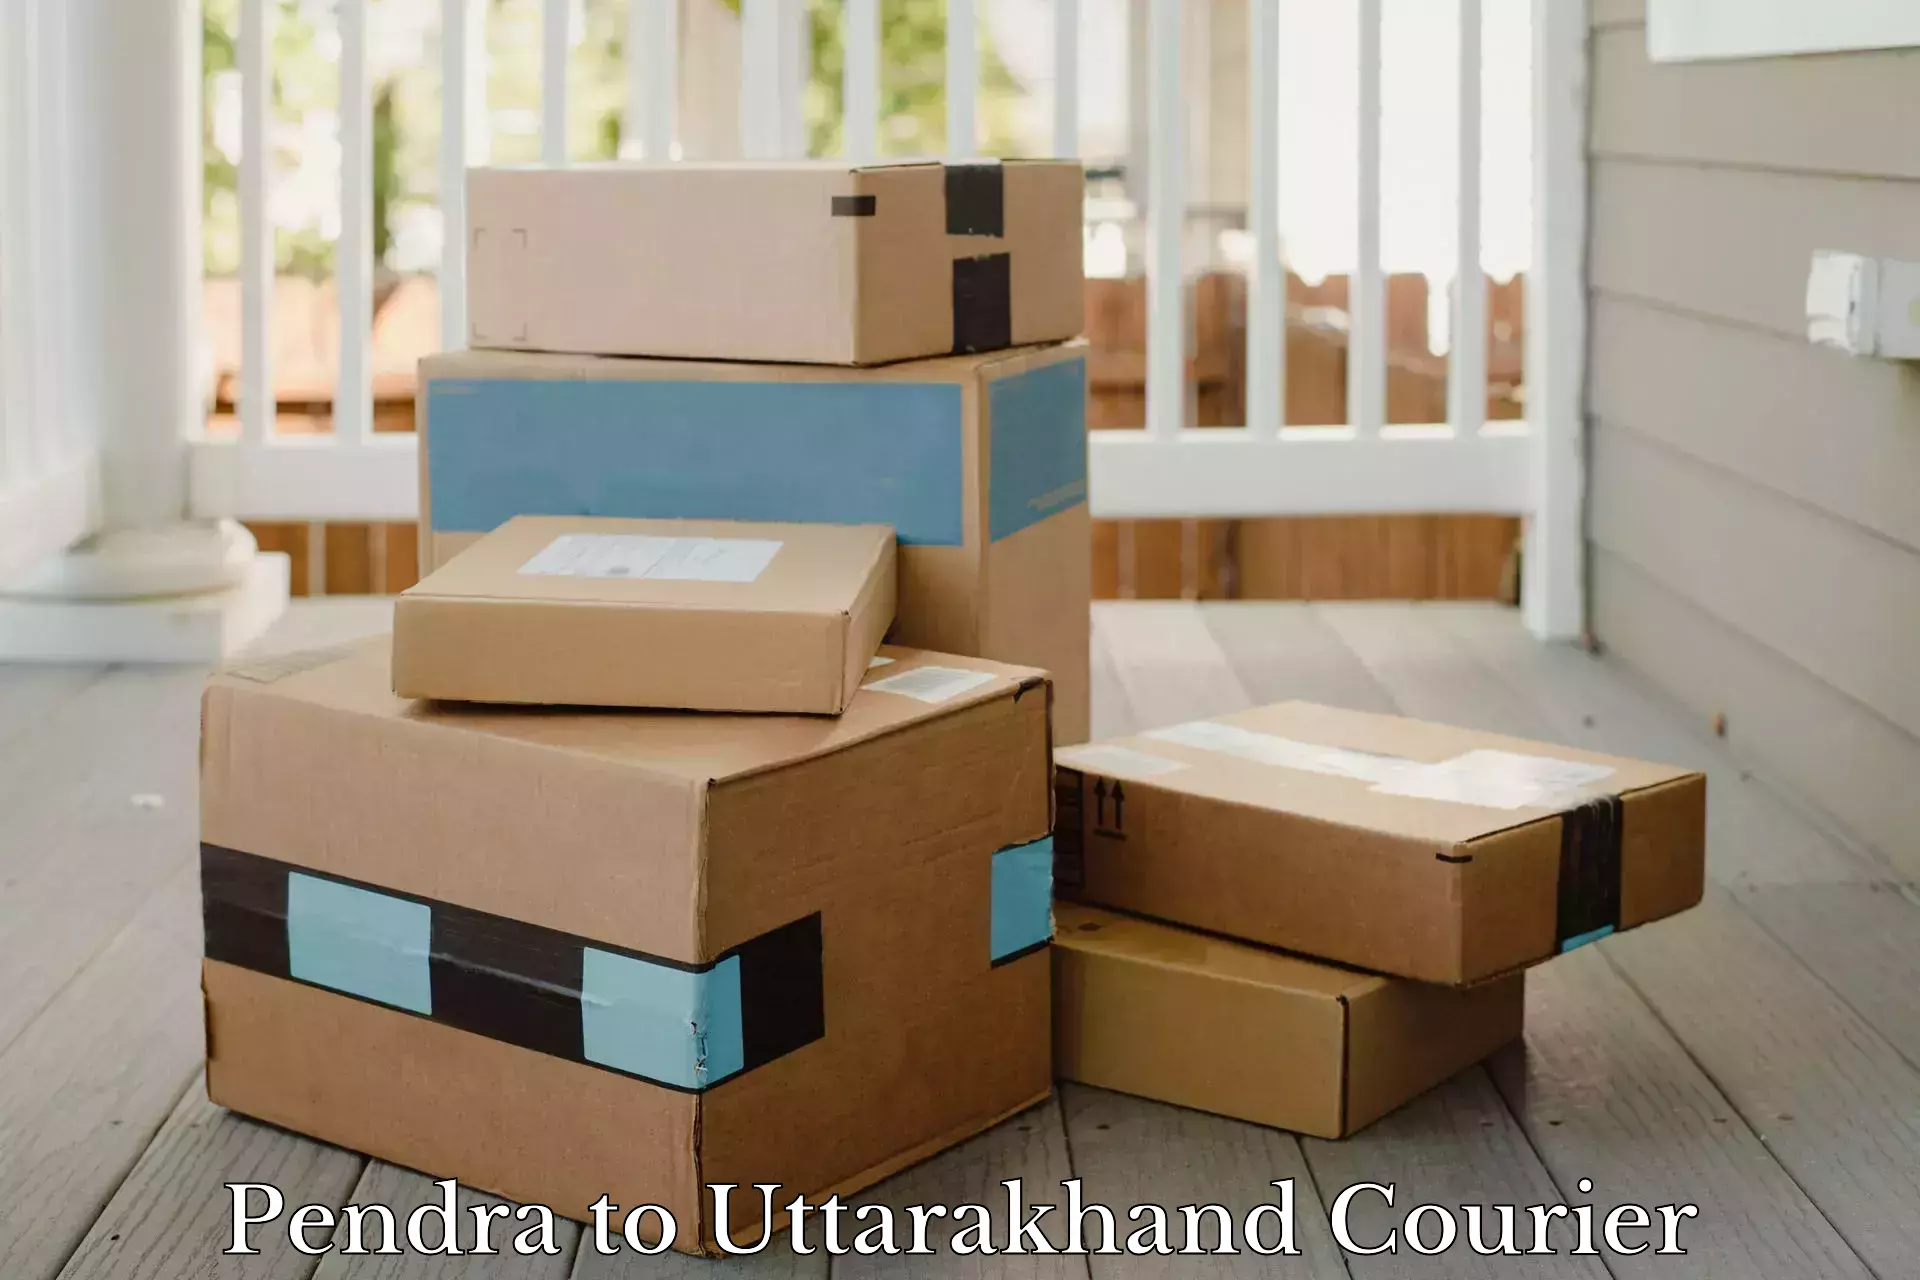 Expedited shipping methods Pendra to Uttarakhand